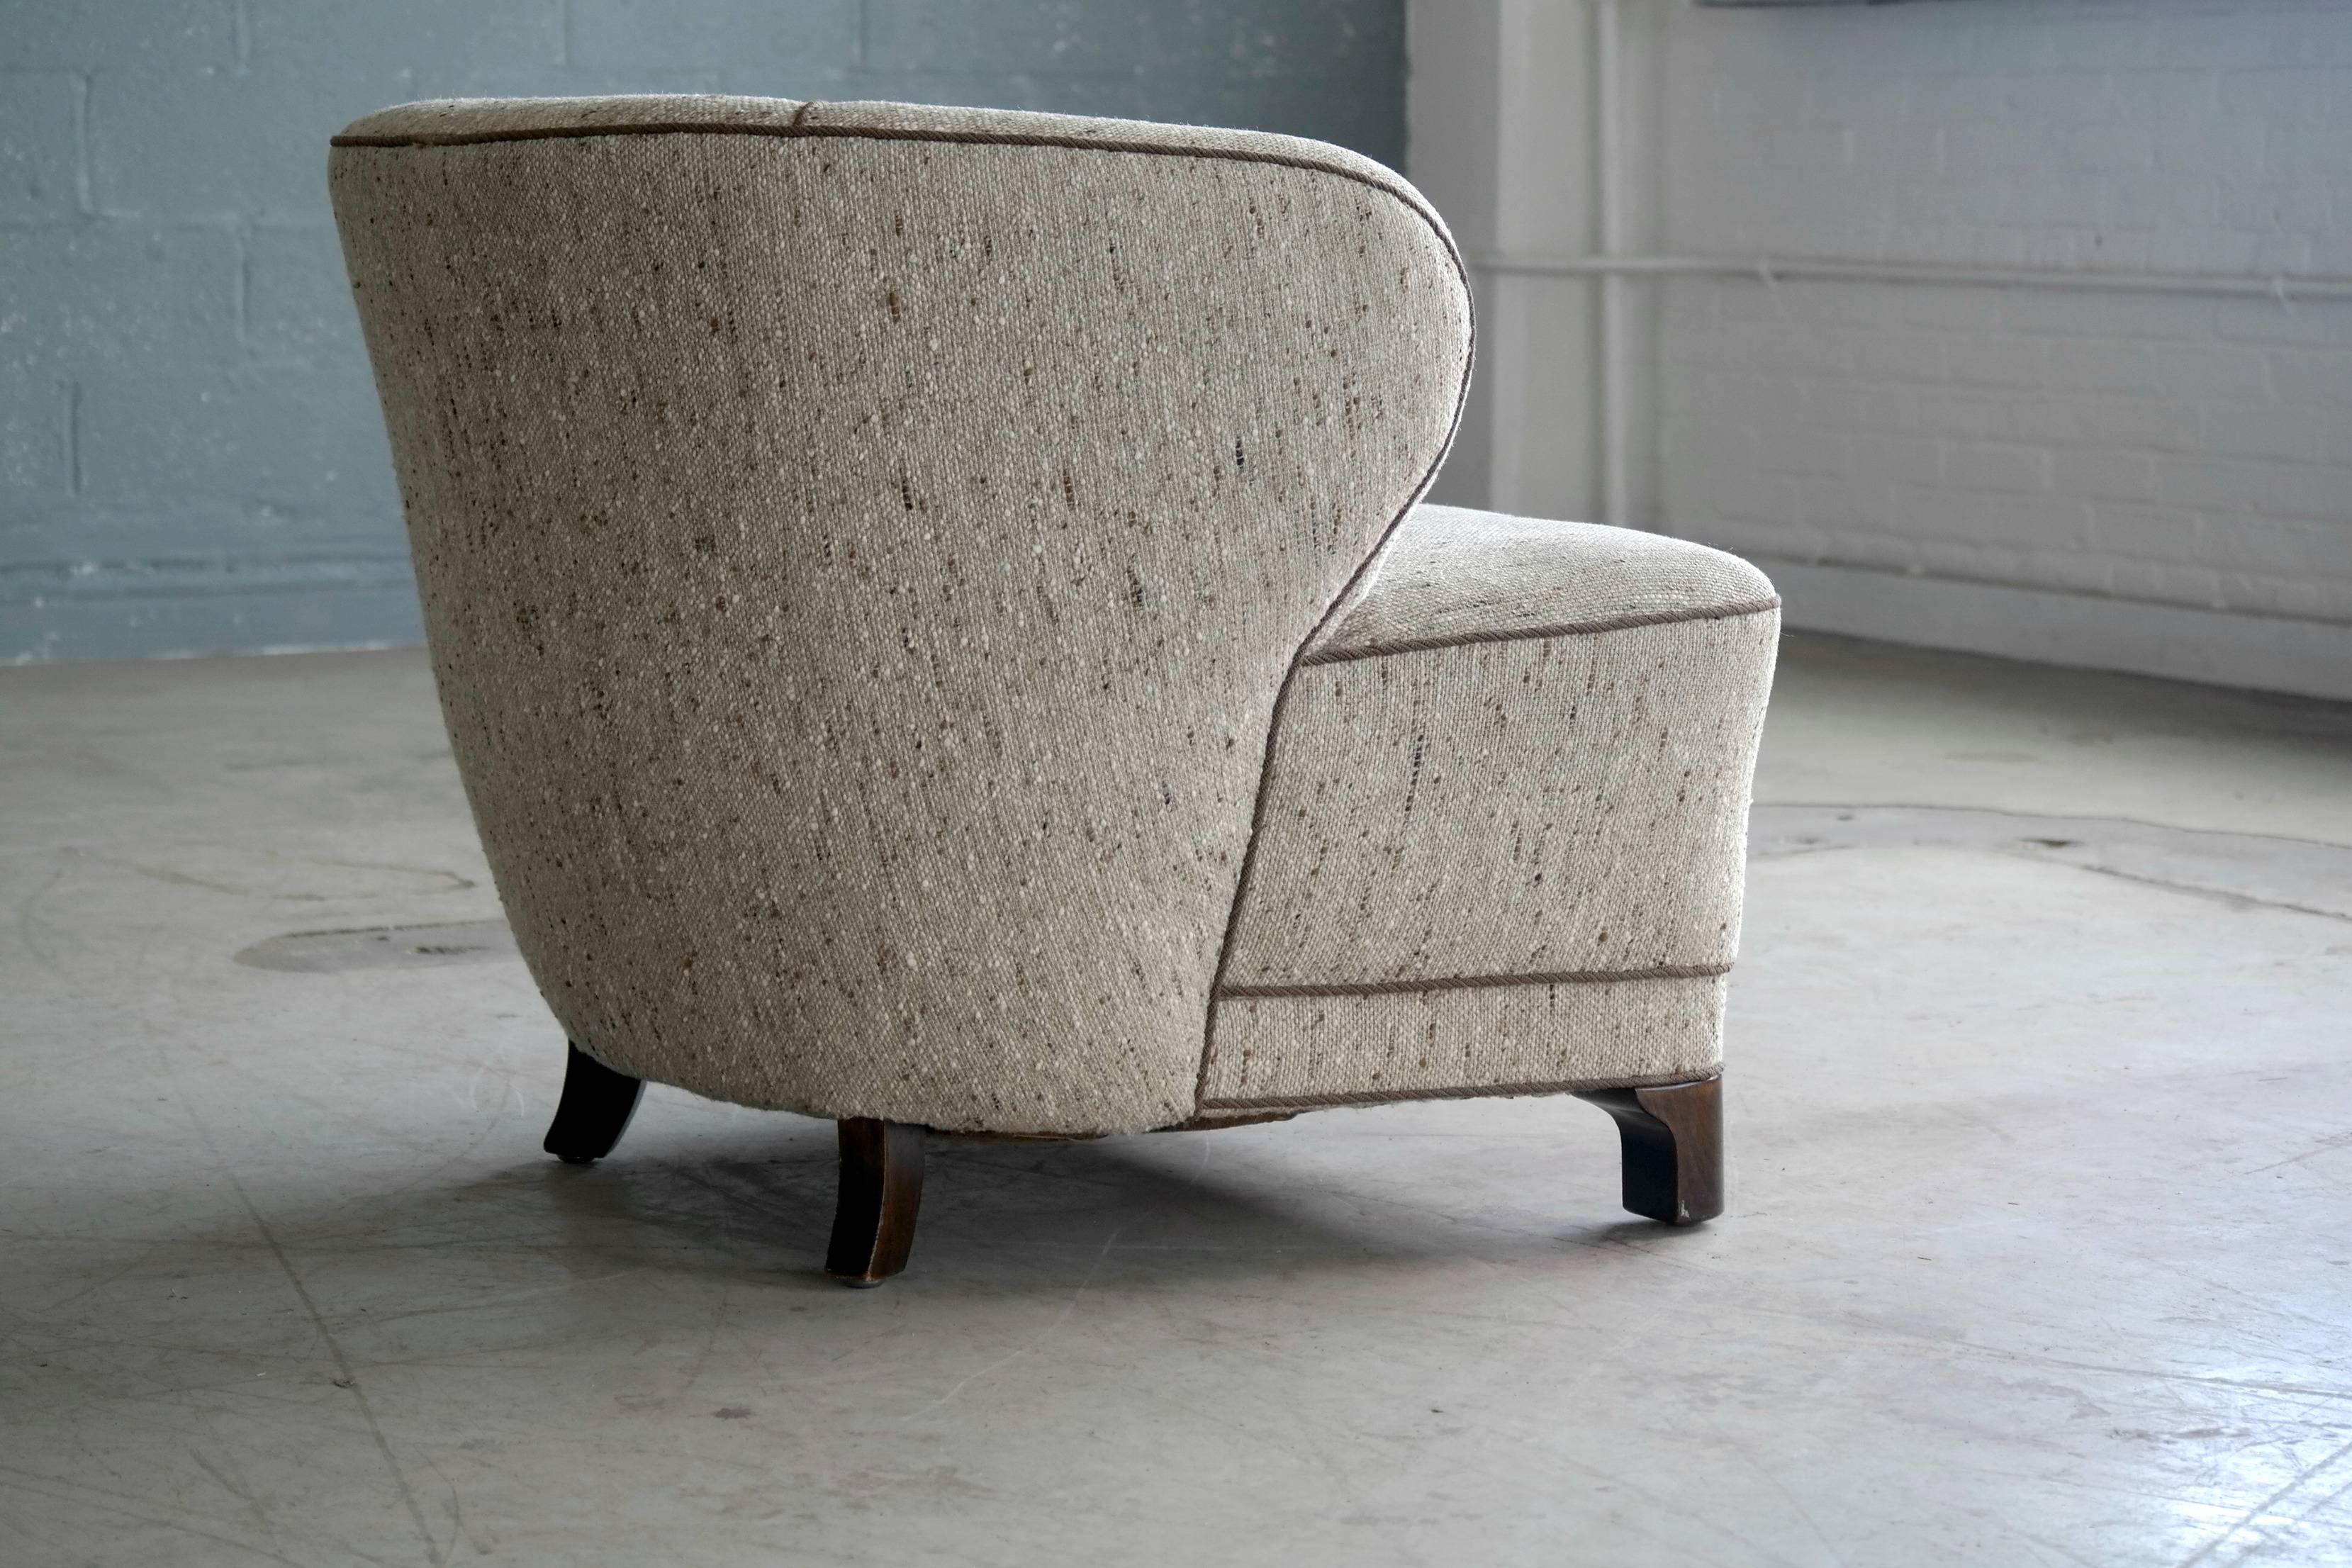 Beech Viggo Boesen Attributed Lounge Chair, 1940s Danish, Midcentury